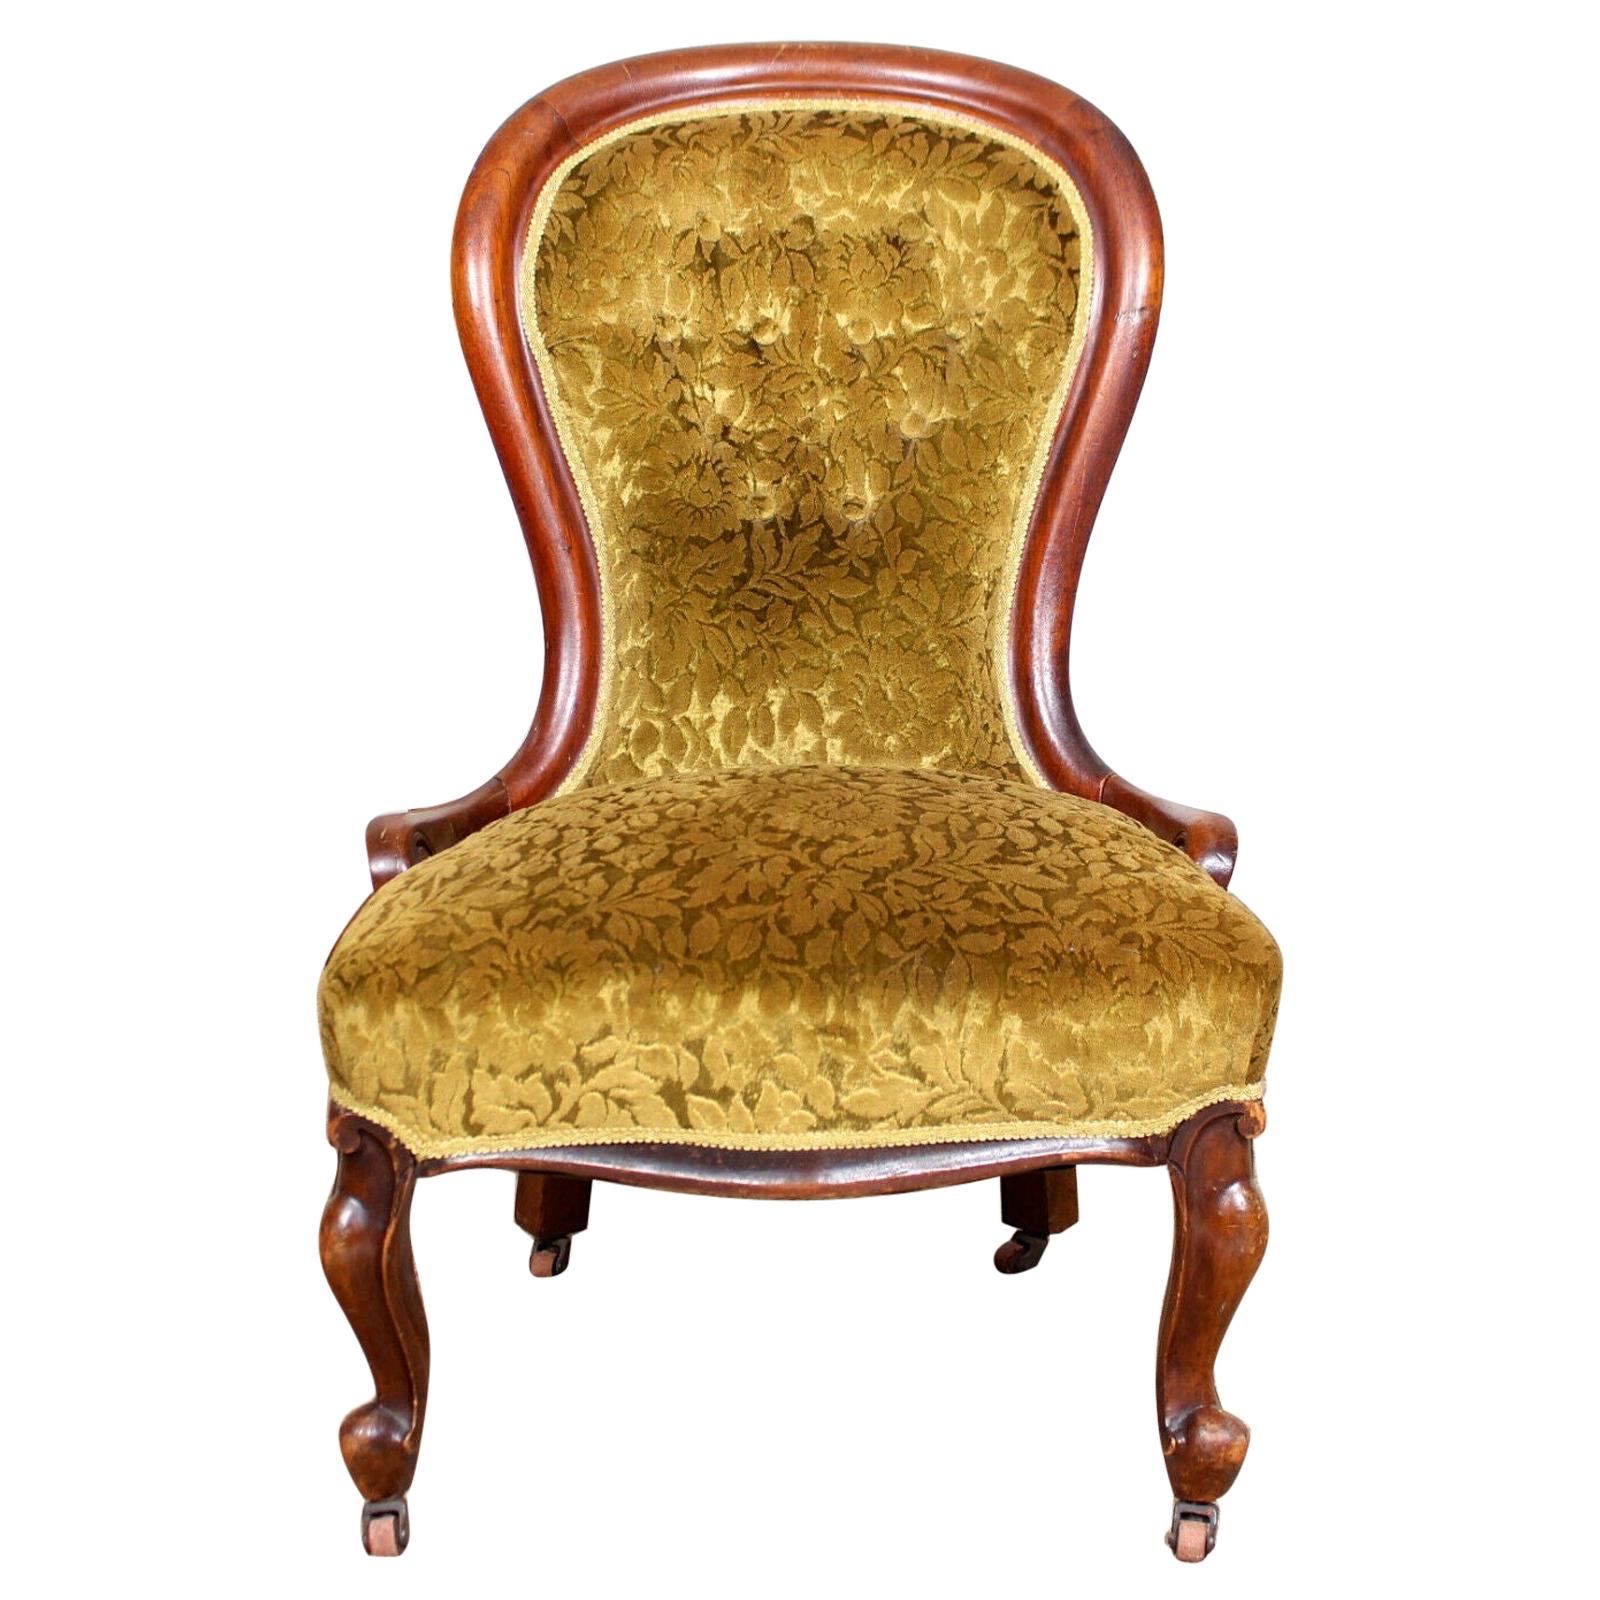 English Spoon Lounge Chair 19th Century Walnut Nursing Chair For Sale